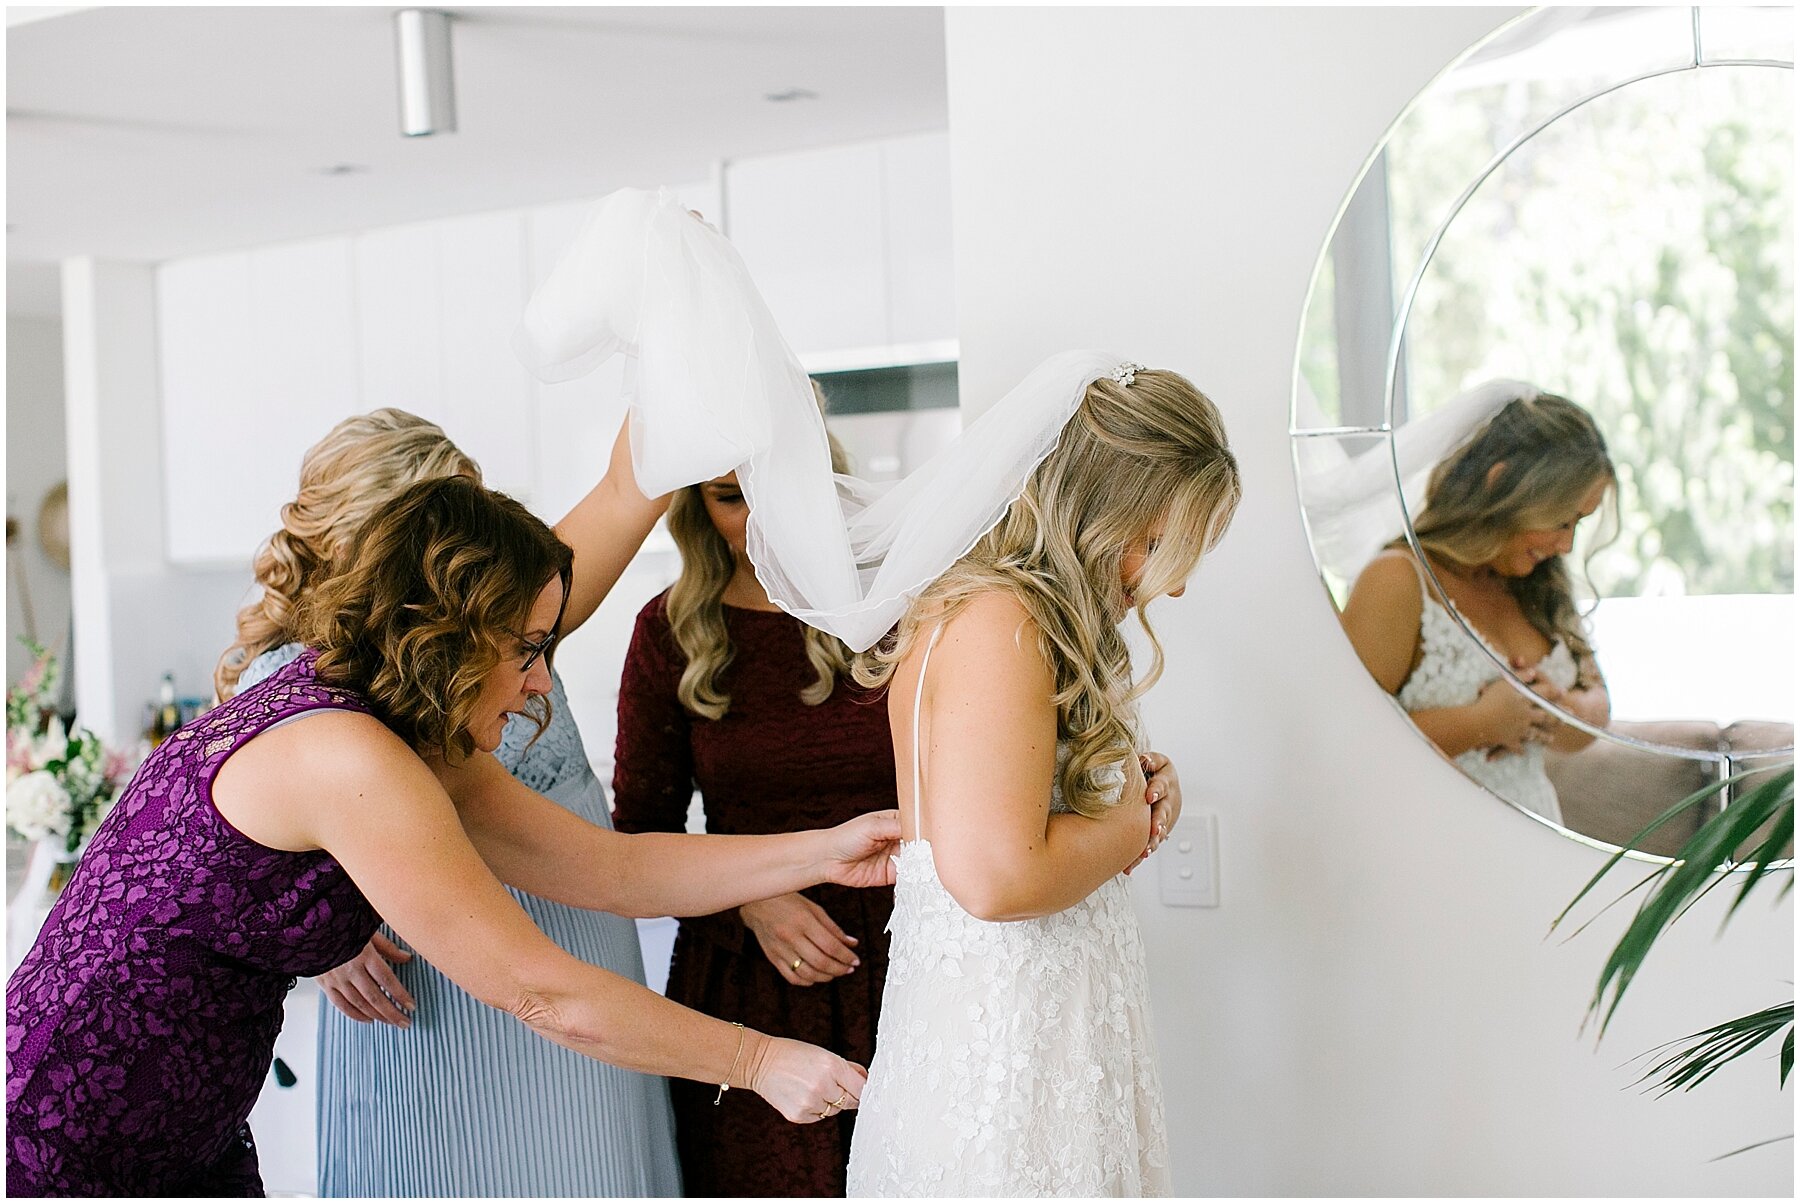 Getting into wedding dress | fremantle wedding